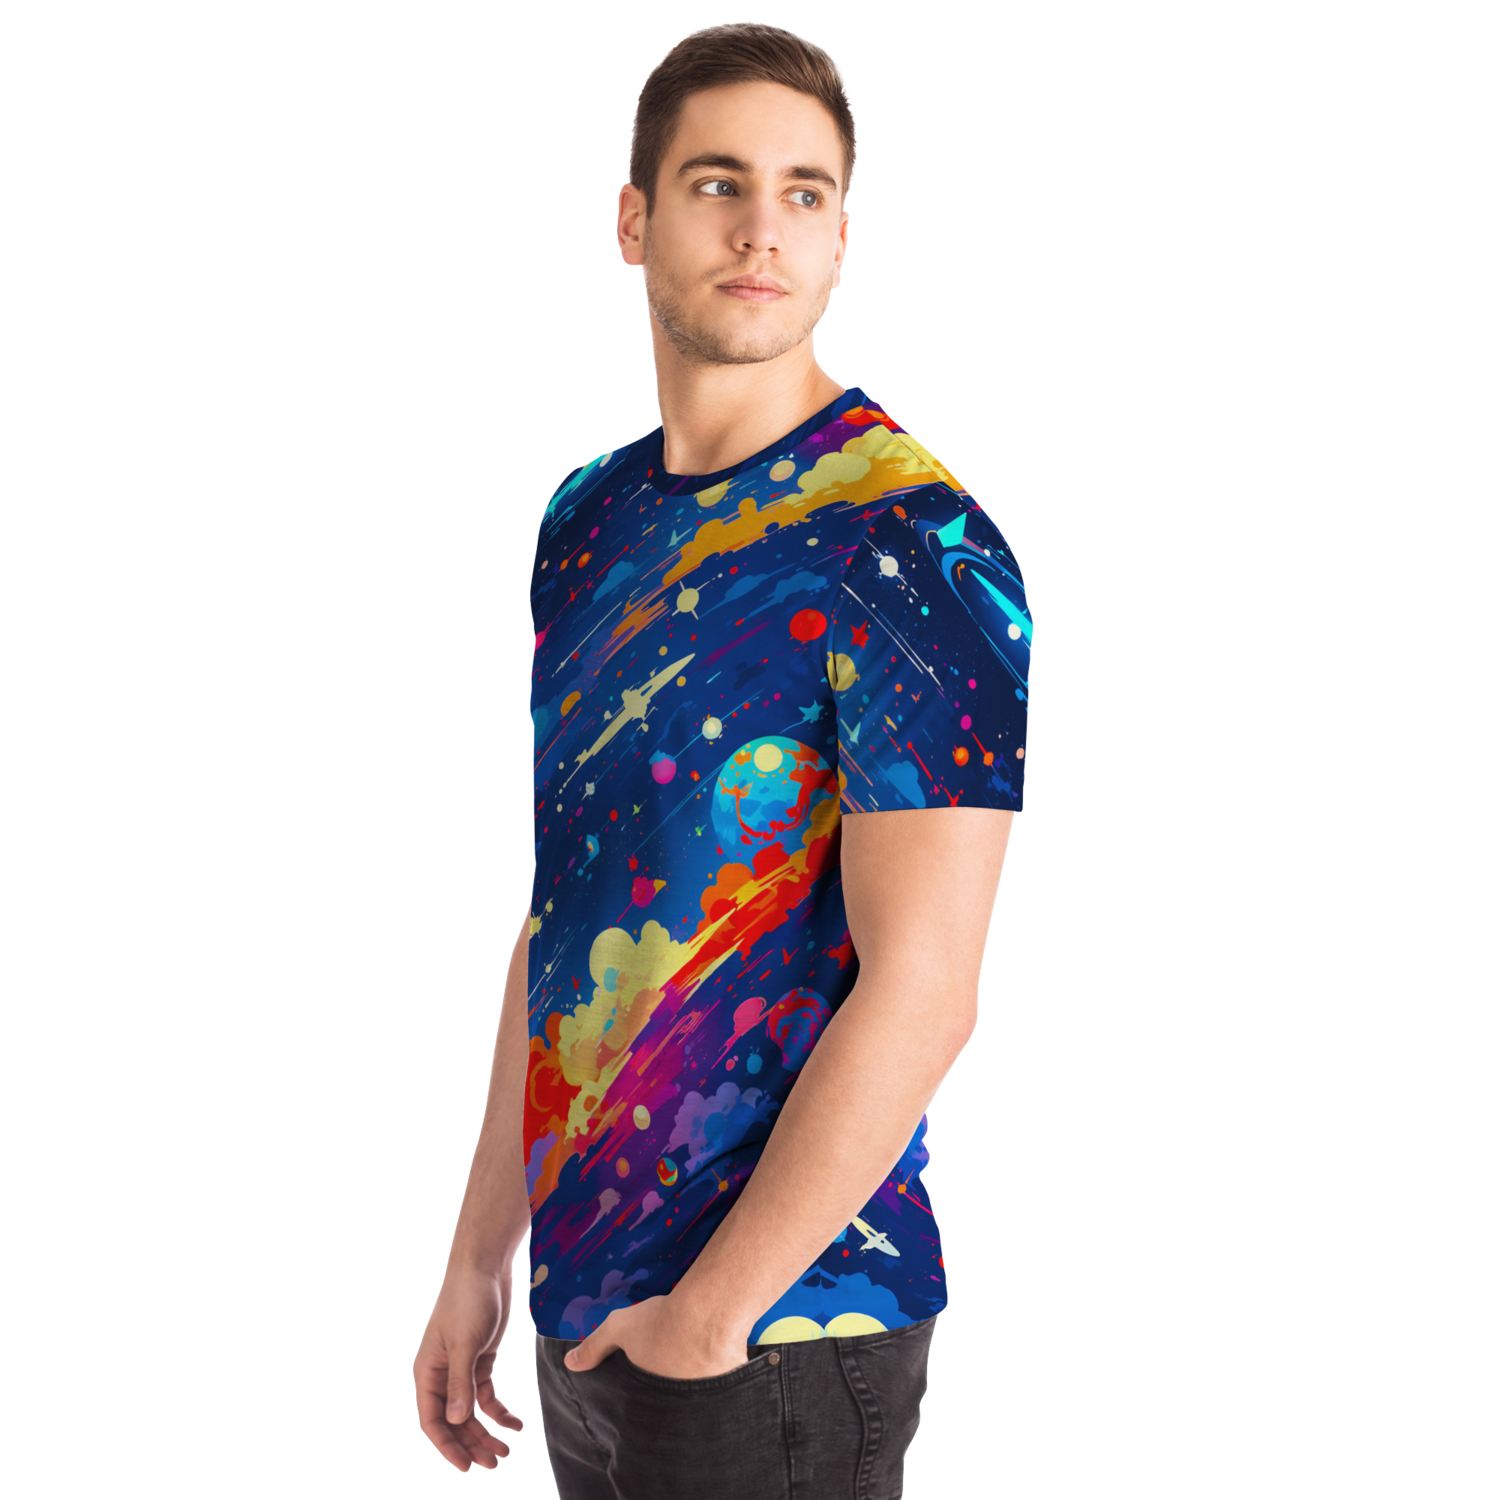 <alt.Galaxy Glimmer T-shirt - Taufaa>